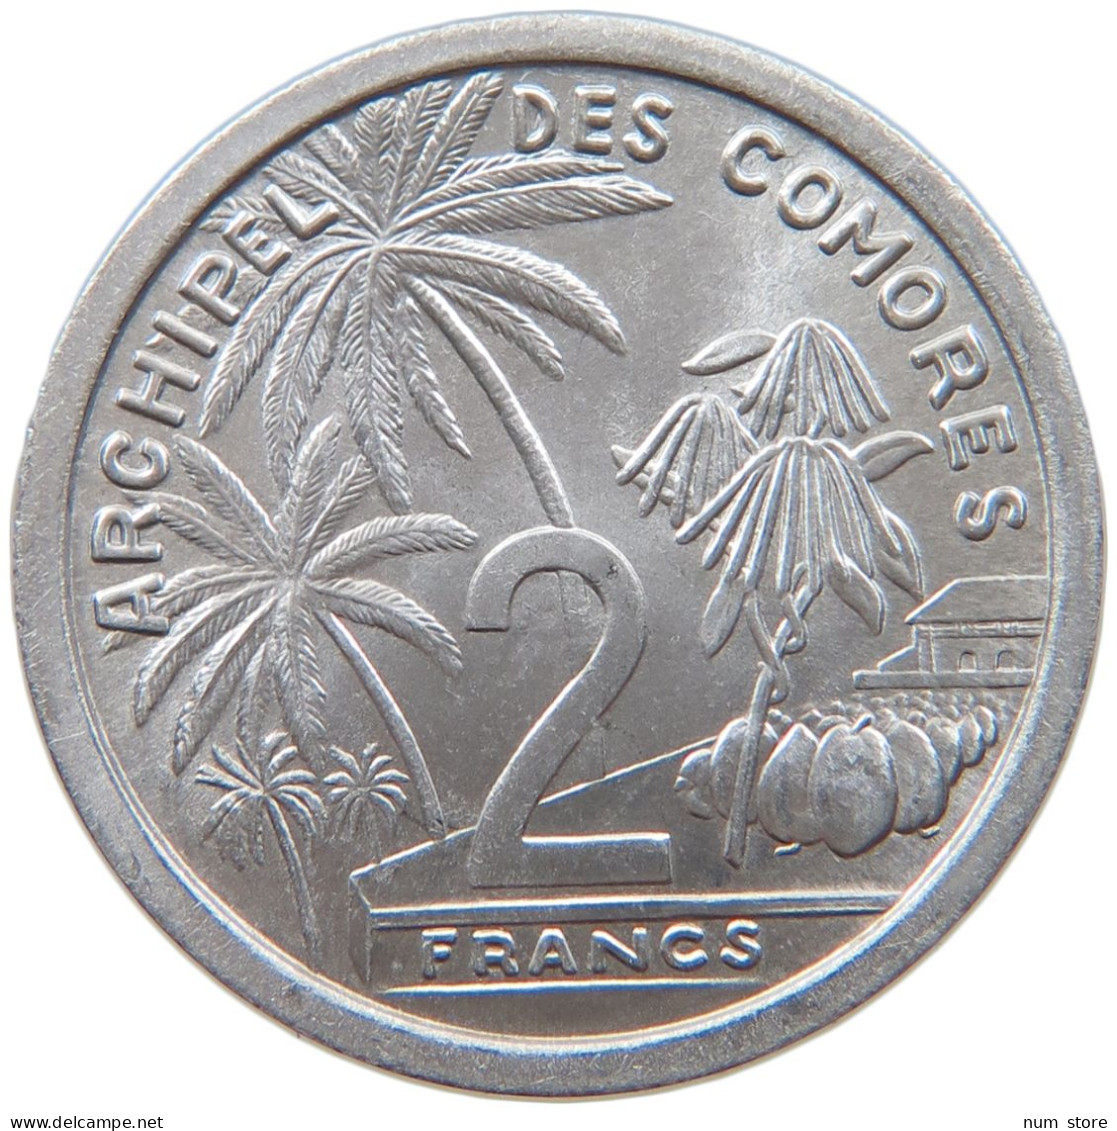 COMORES 2 FRANCS 1964  #t162 0383 - Komoren